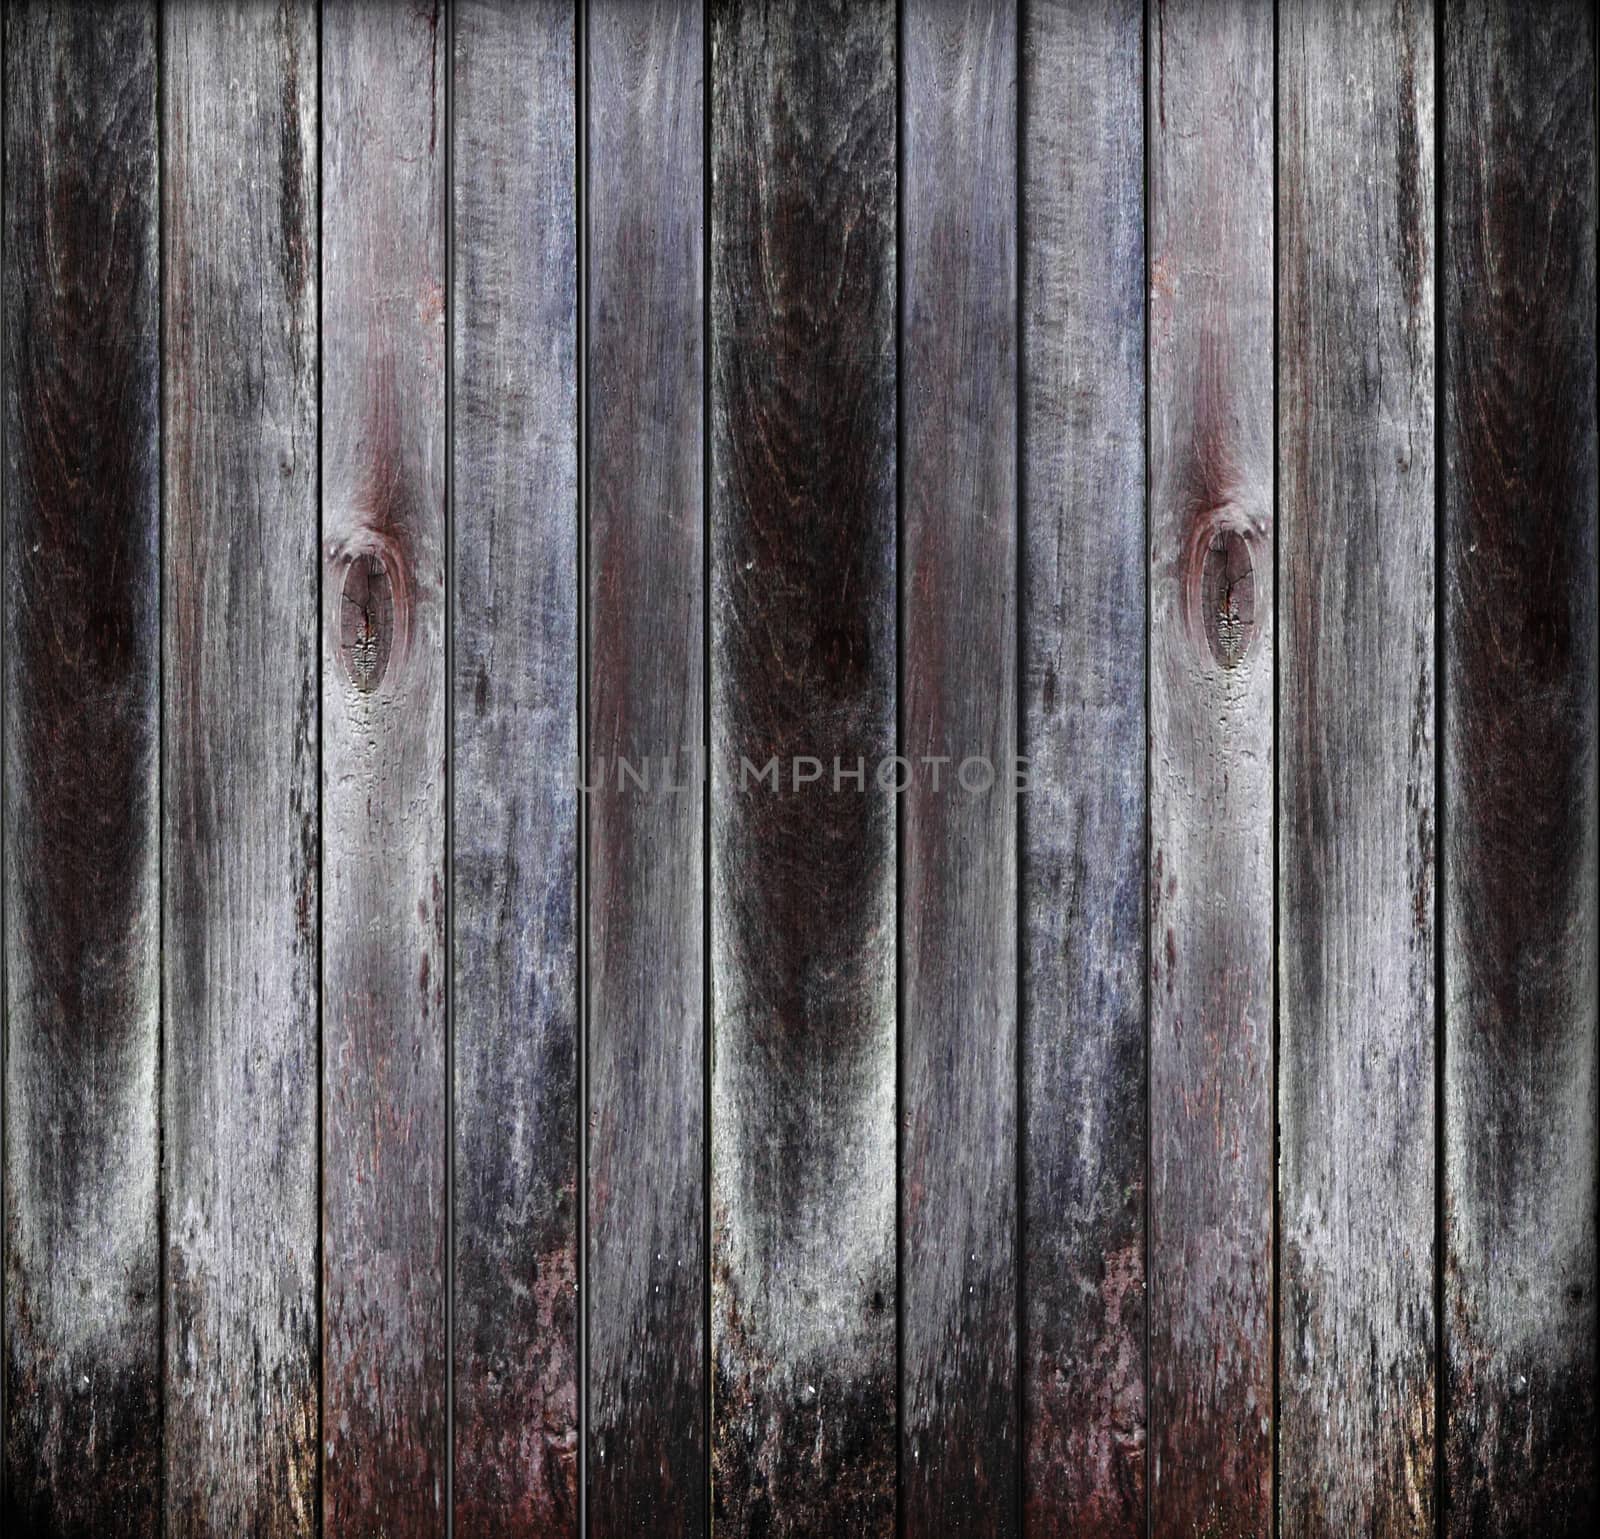 Old Grunge wood panels for background